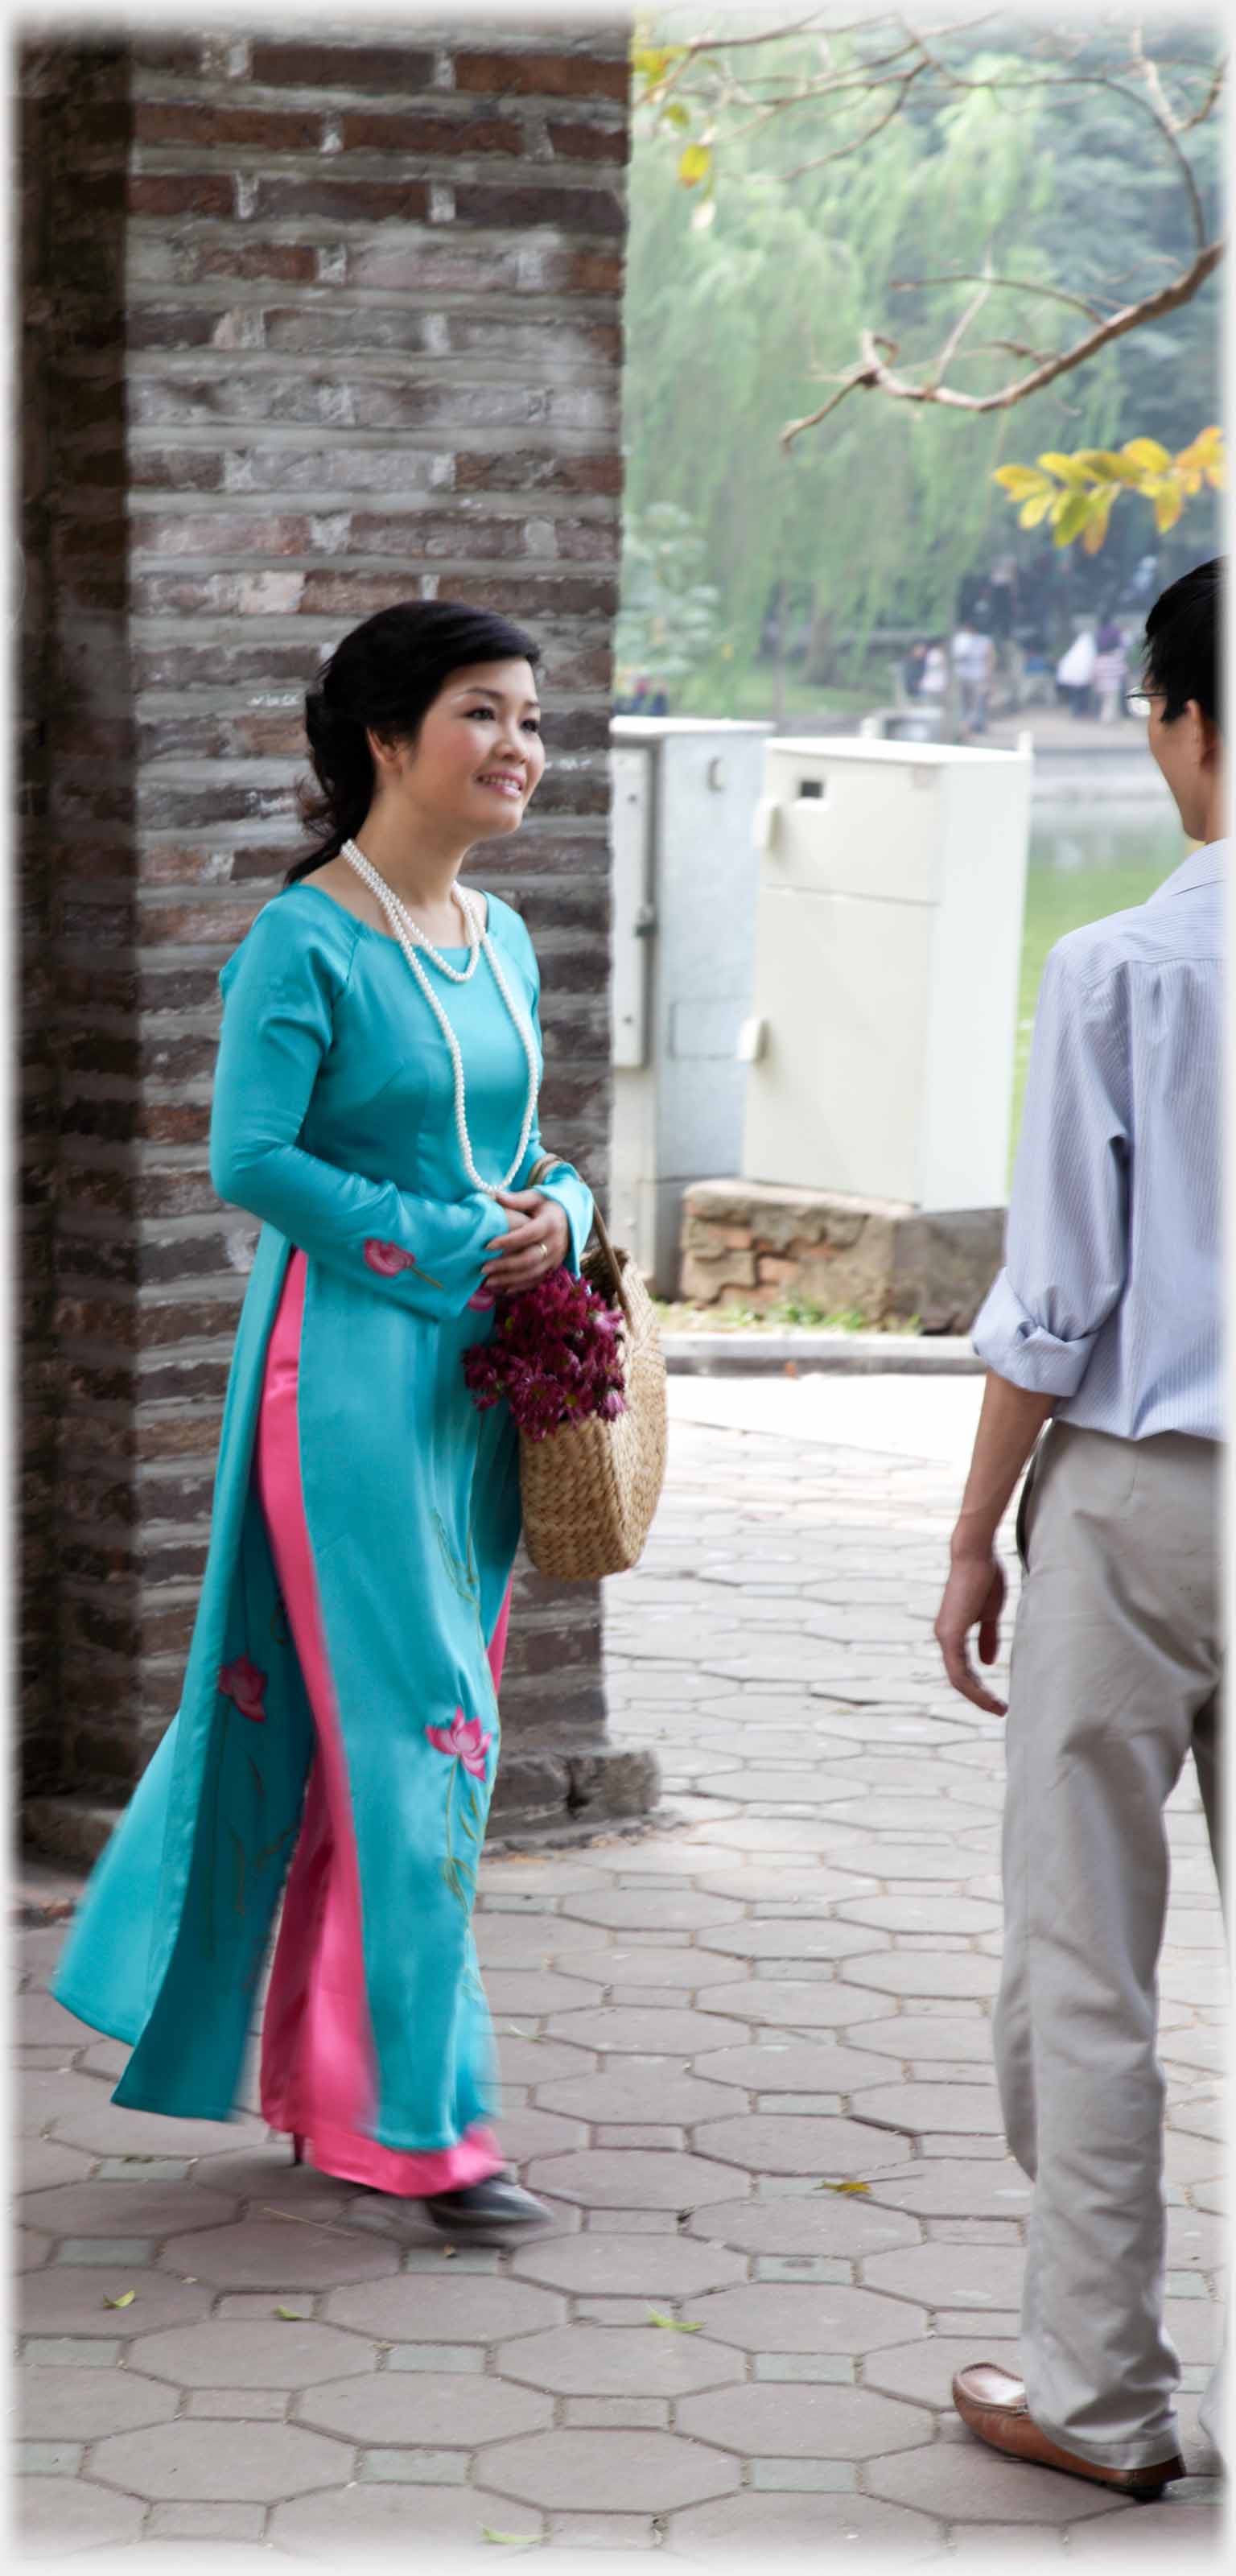 Woman in long elegant turquoise dress standing next to man.